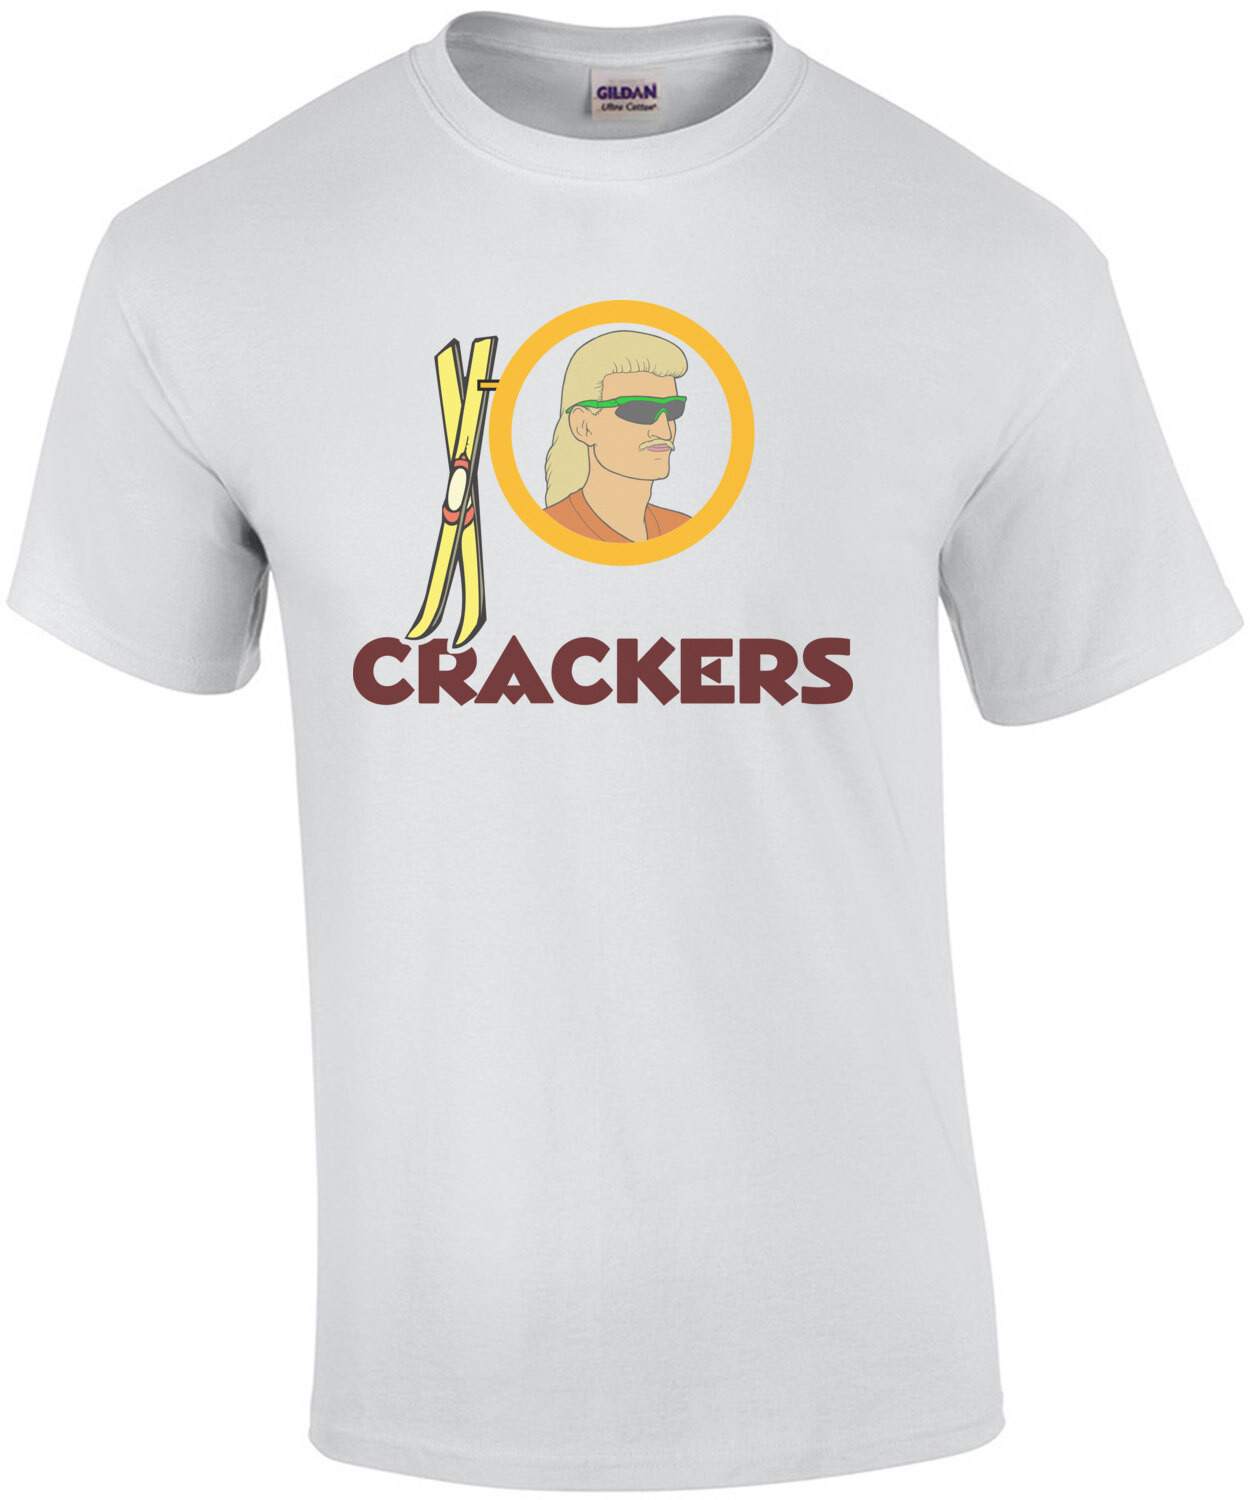 Crackers - Washington Redskins Parody Shirt